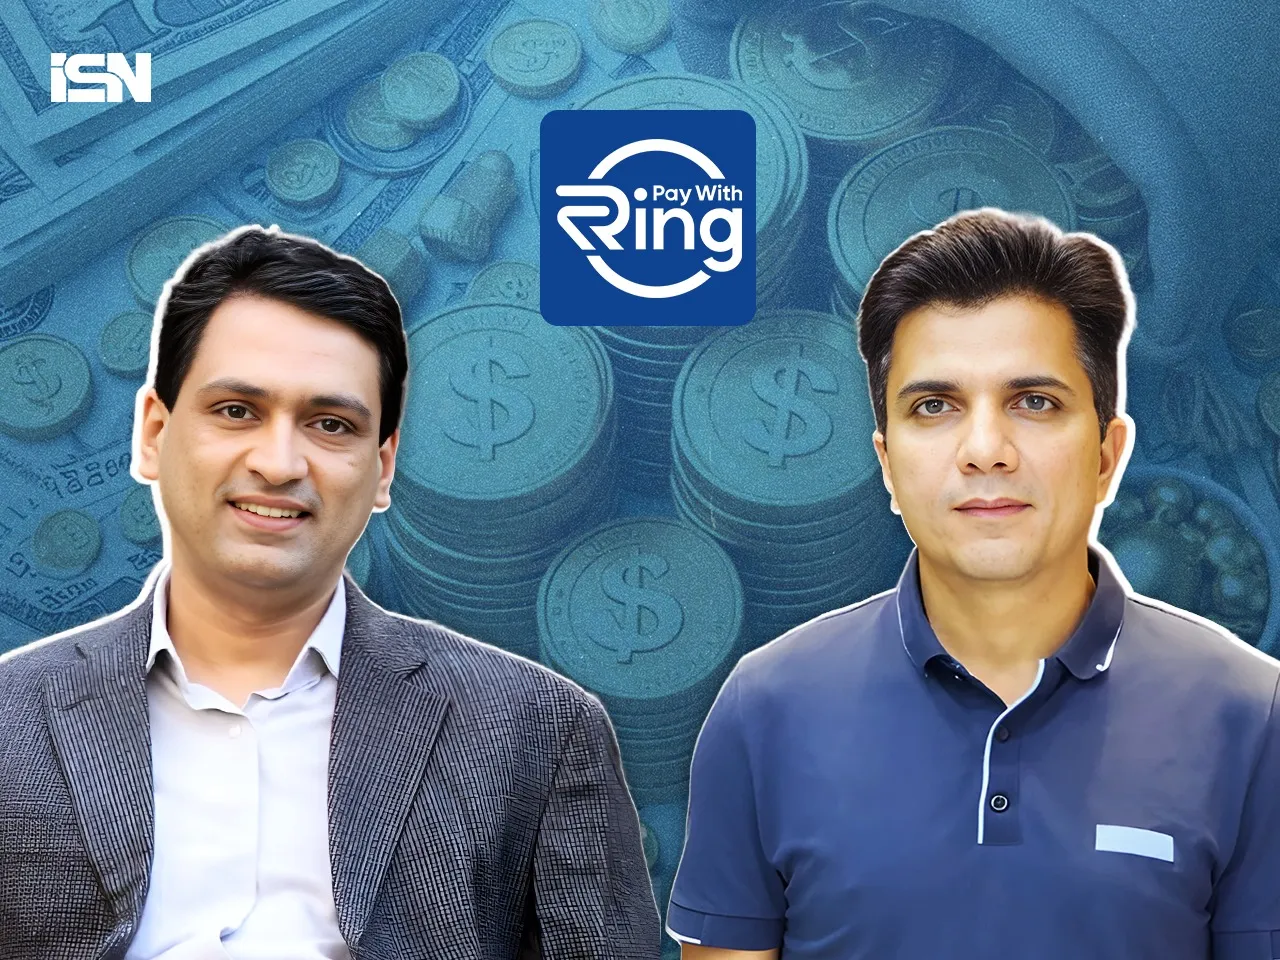 RING raises Rs 100 crore